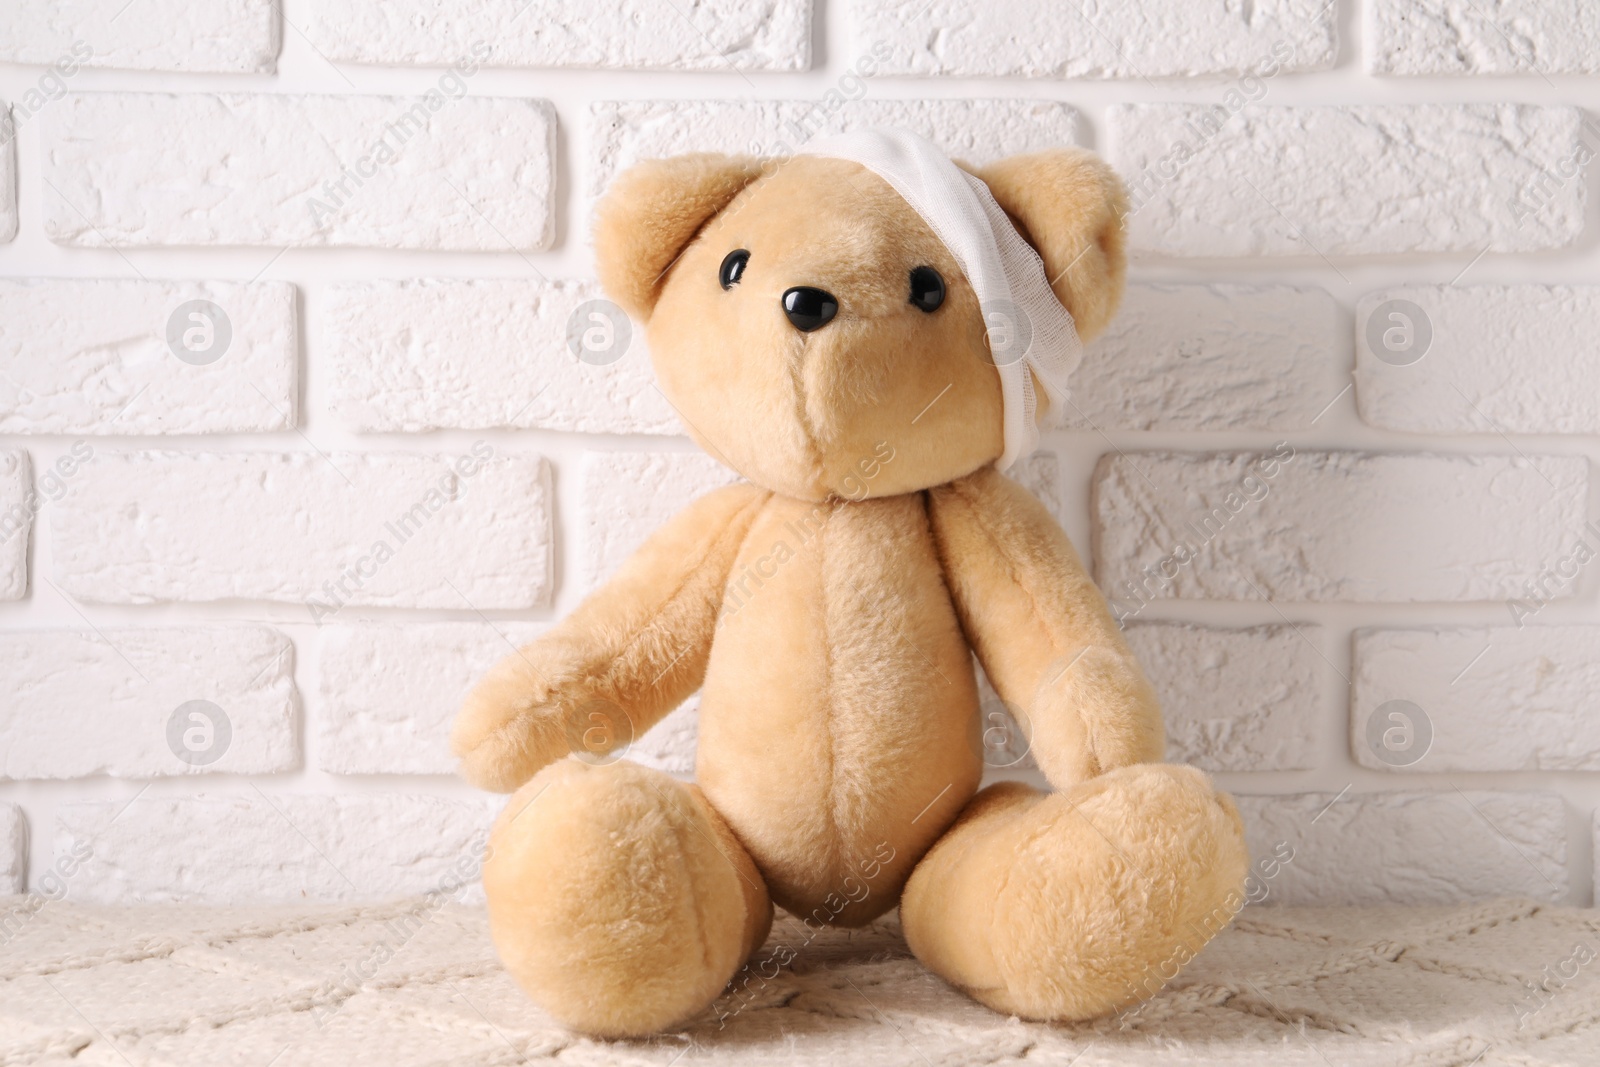 Photo of Toy bear with bandage on soft surface near white brick wall